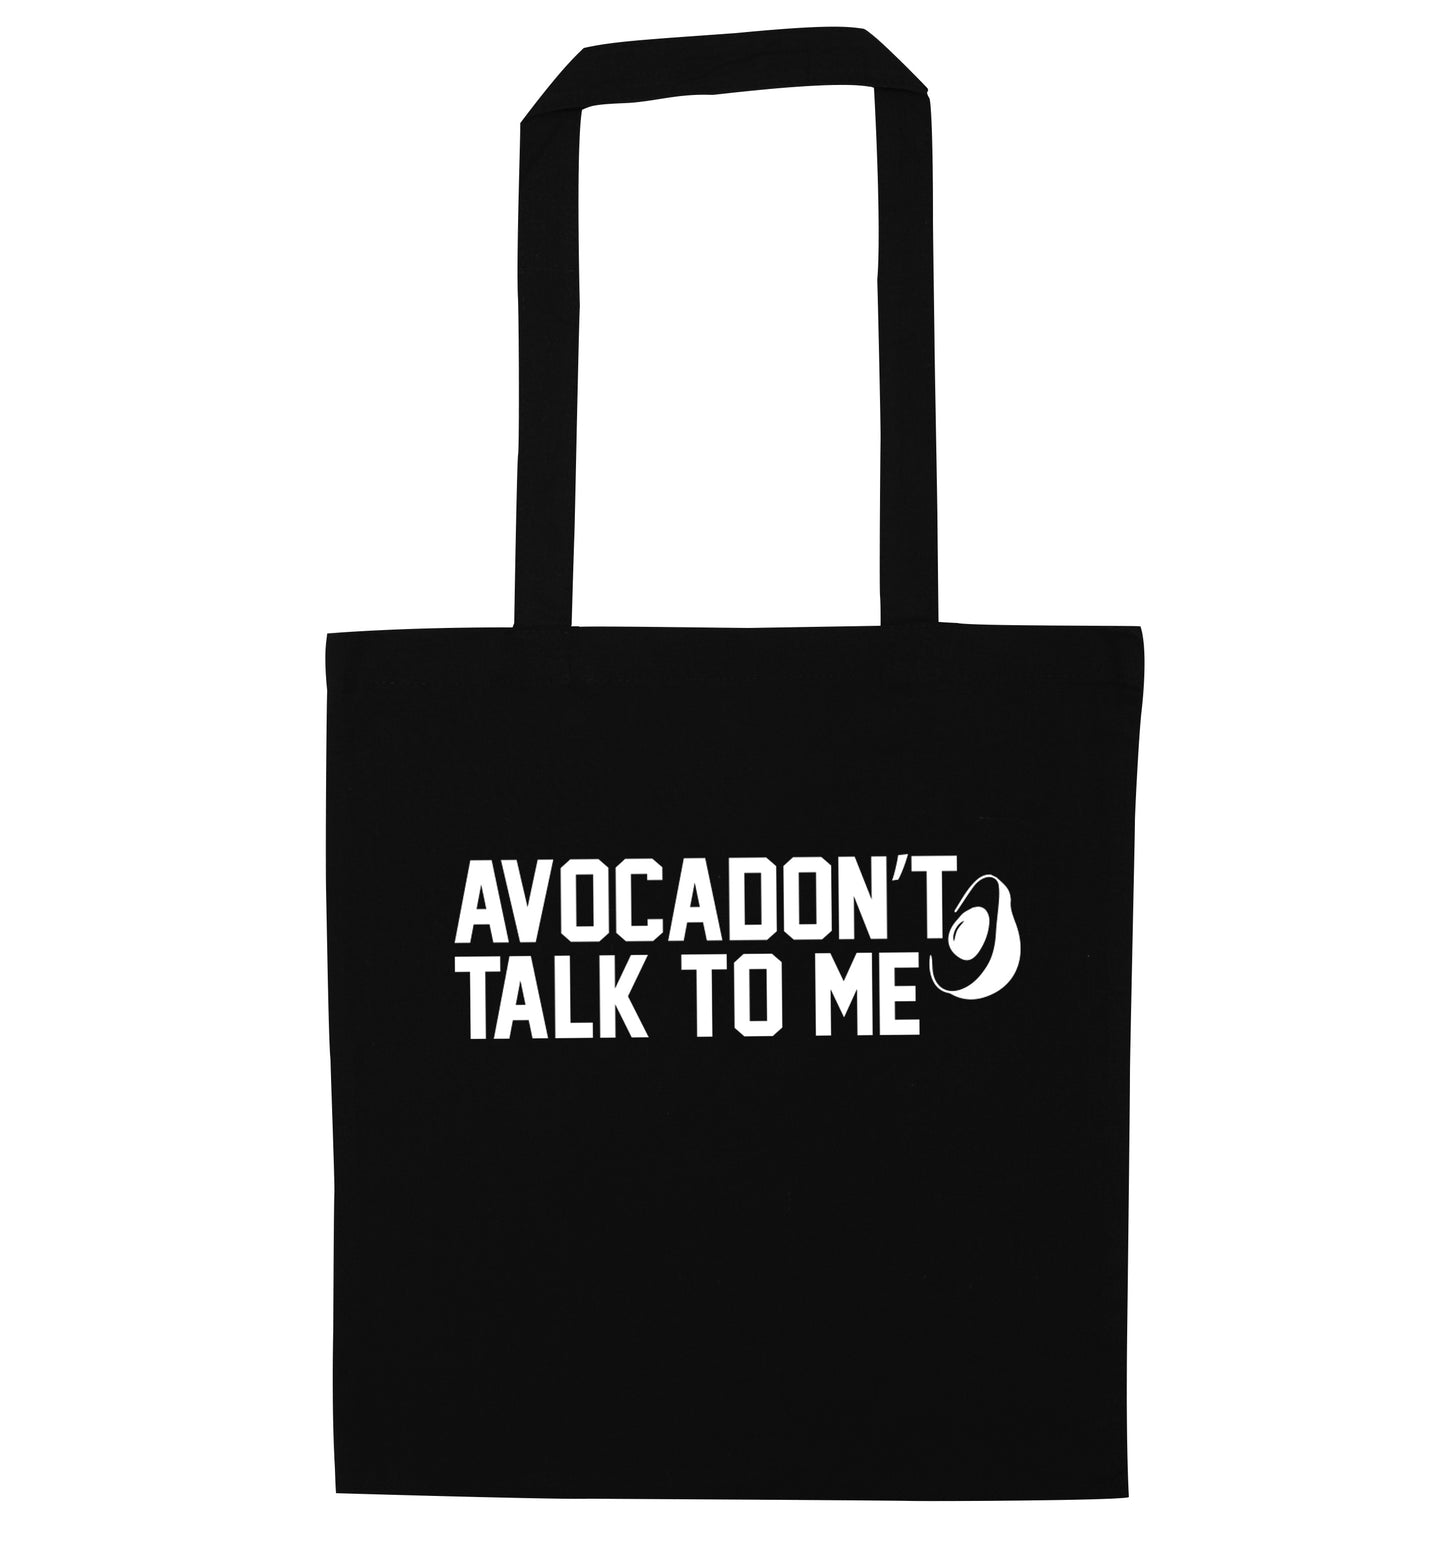 Avocadon't talk to me black tote bag